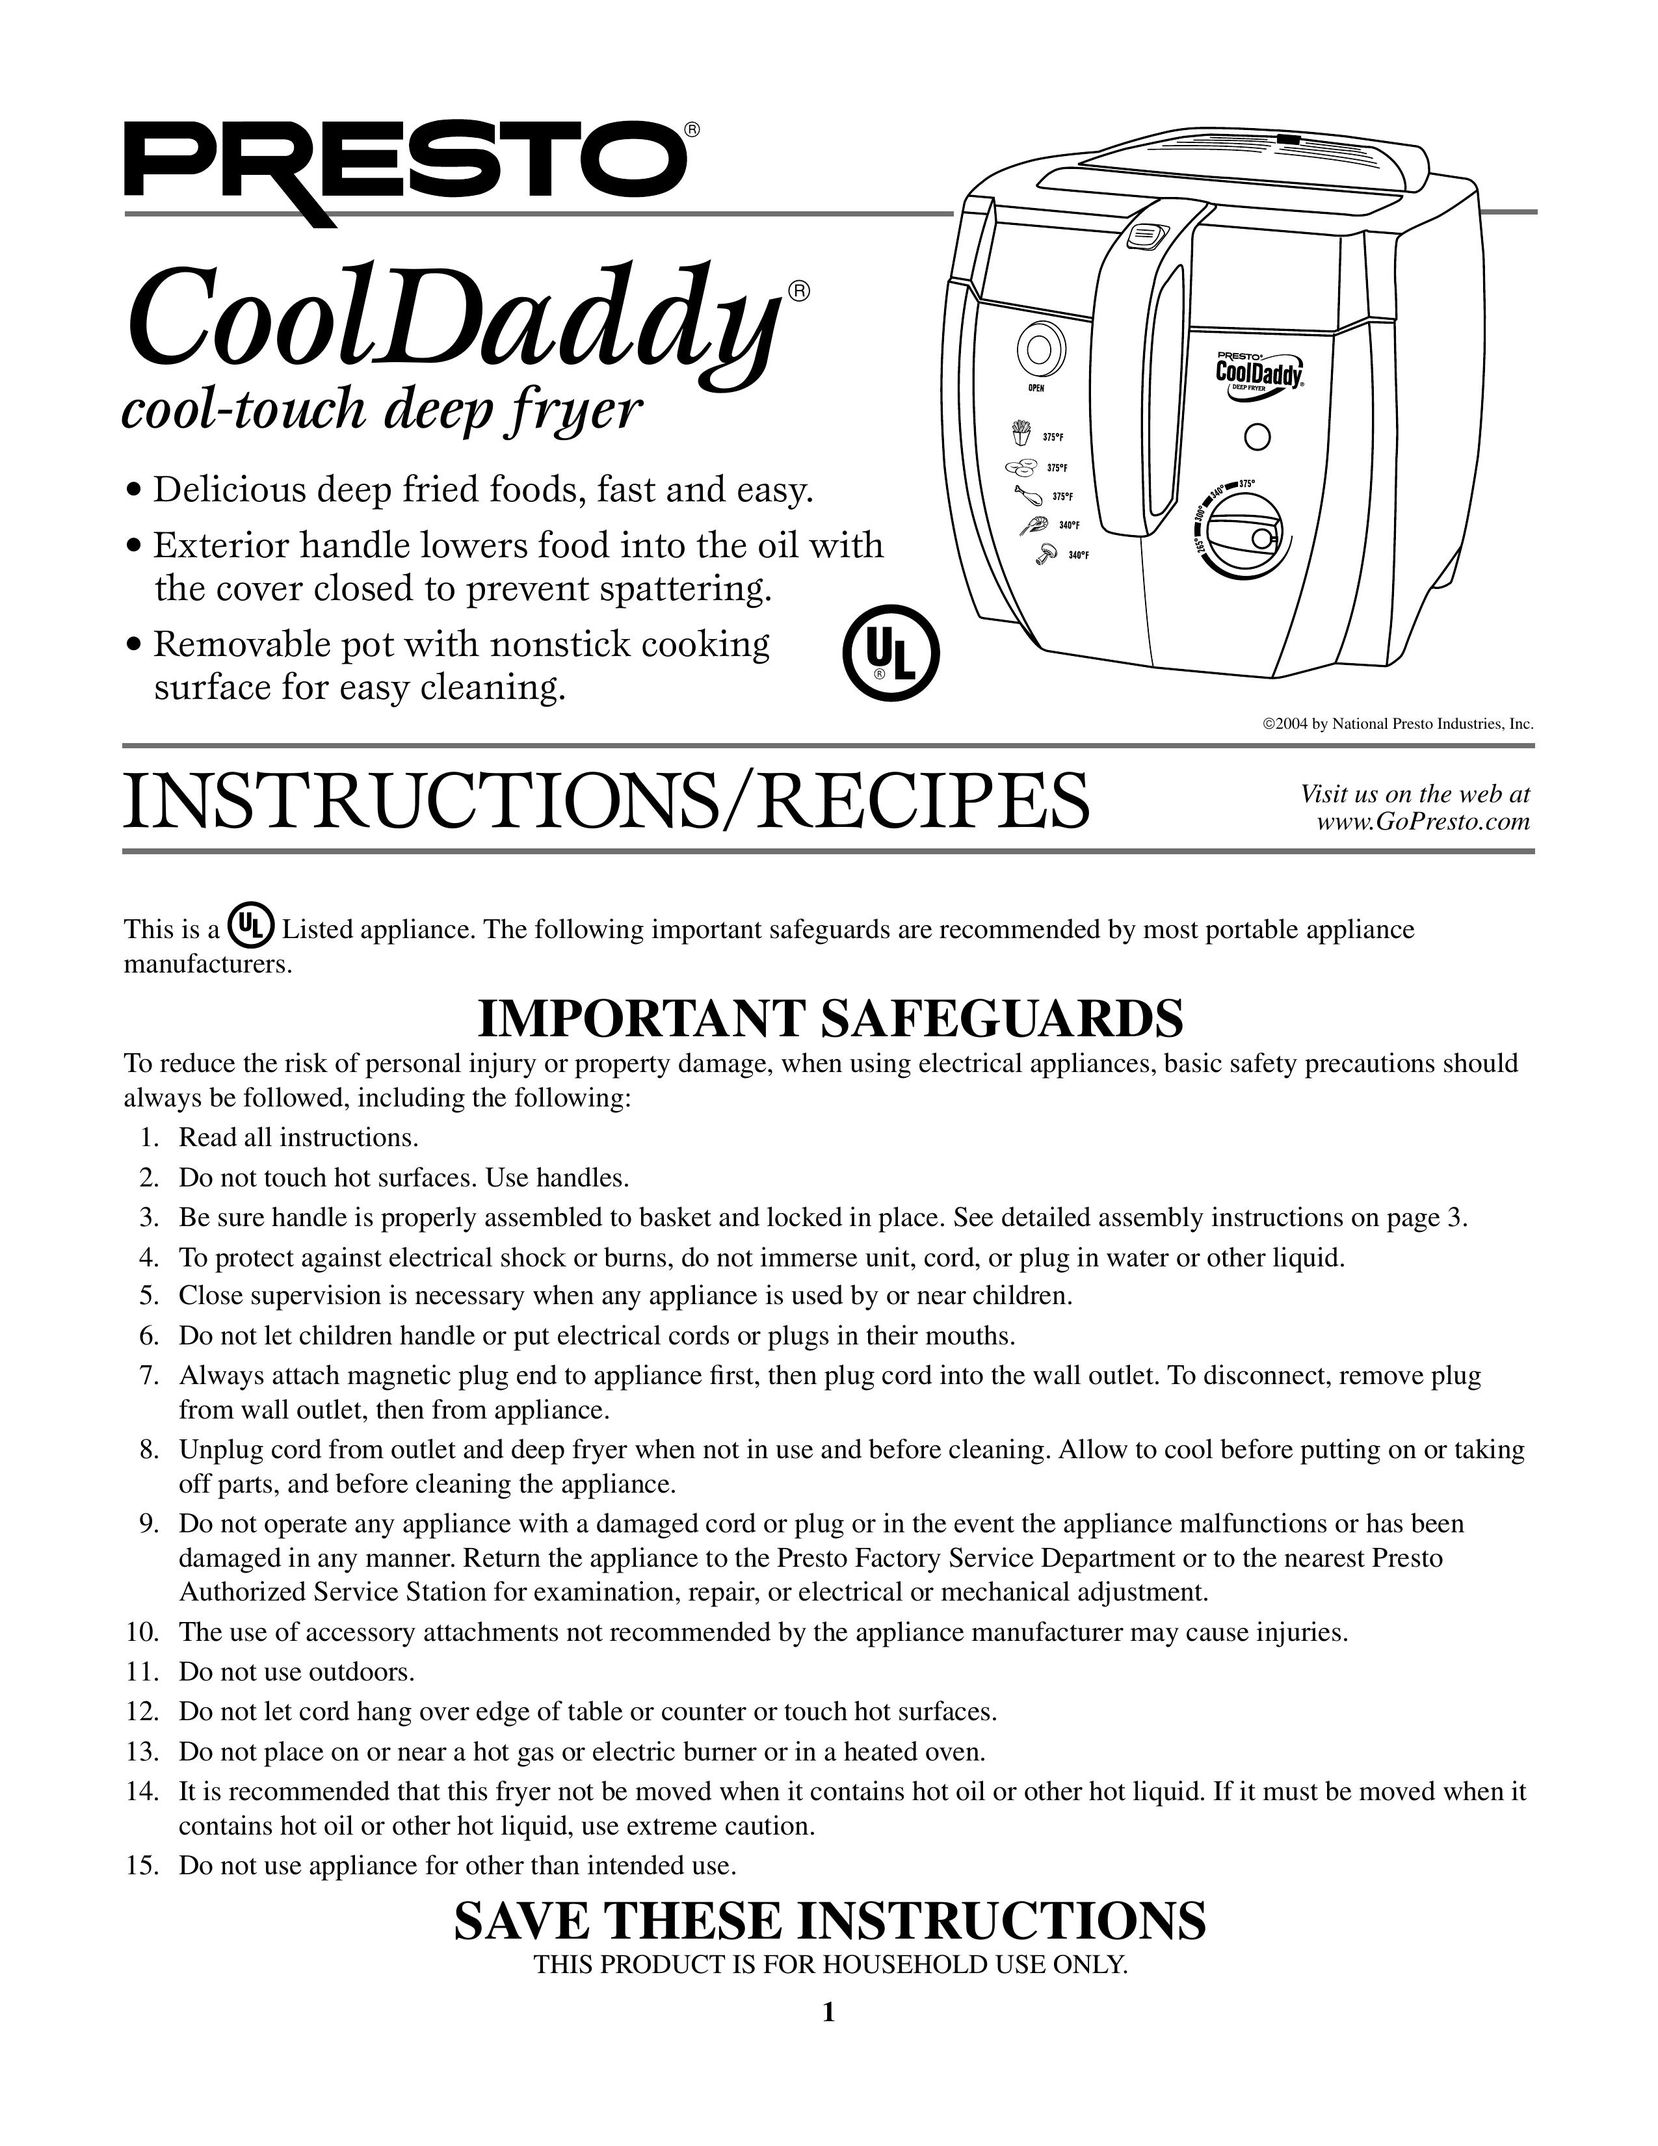 Presto CoolDaddy Fryer User Manual